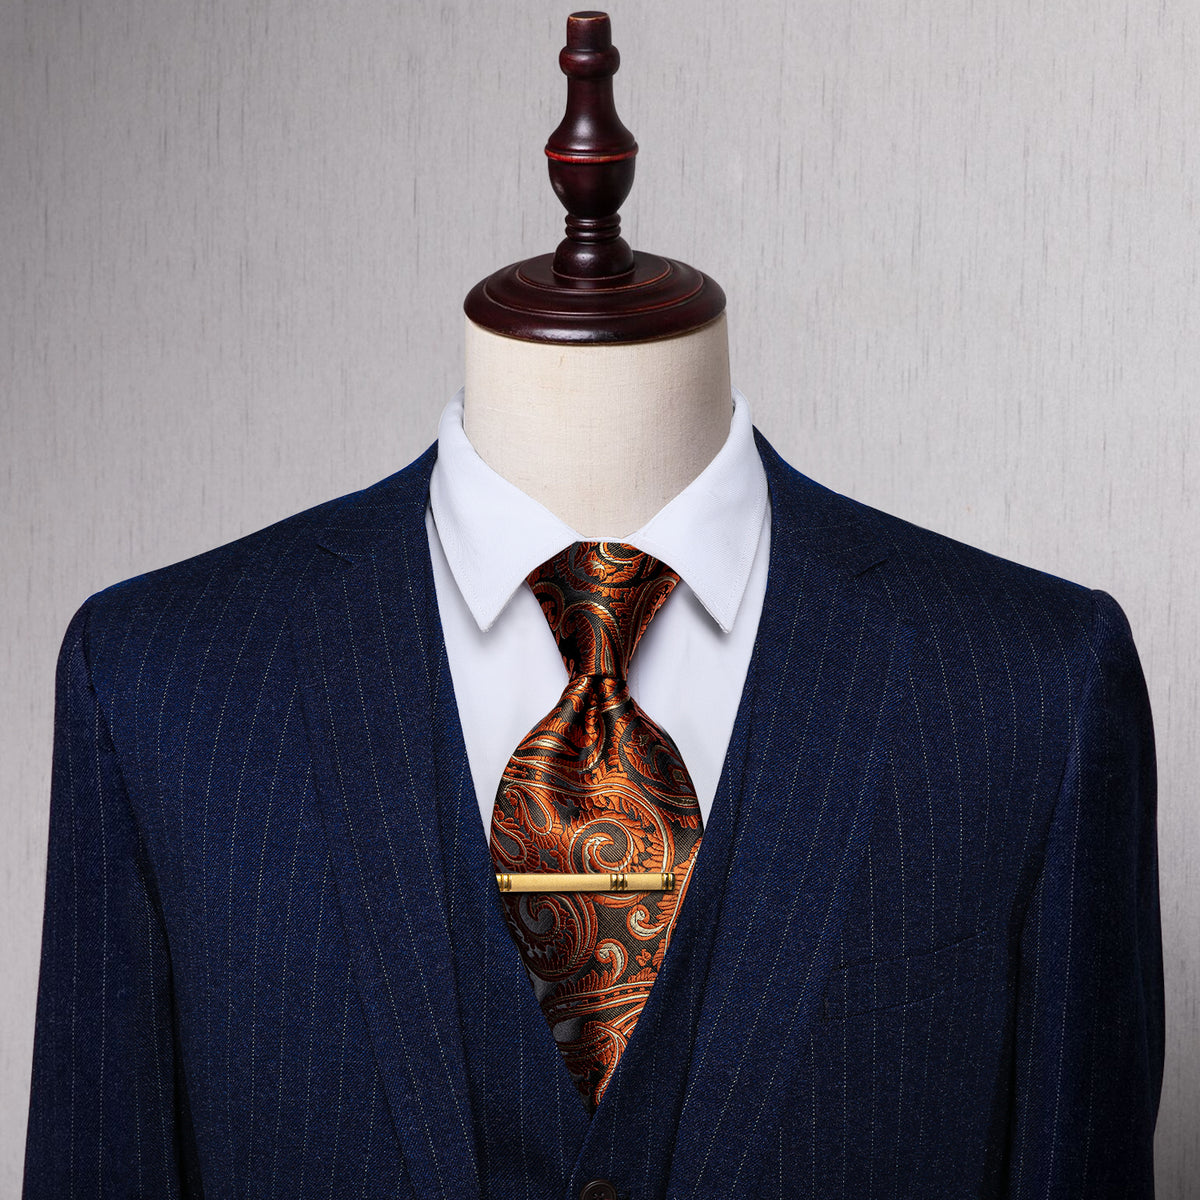 Brown Bronze Gold Paisley Silk Necktie with Golden Tie Clip